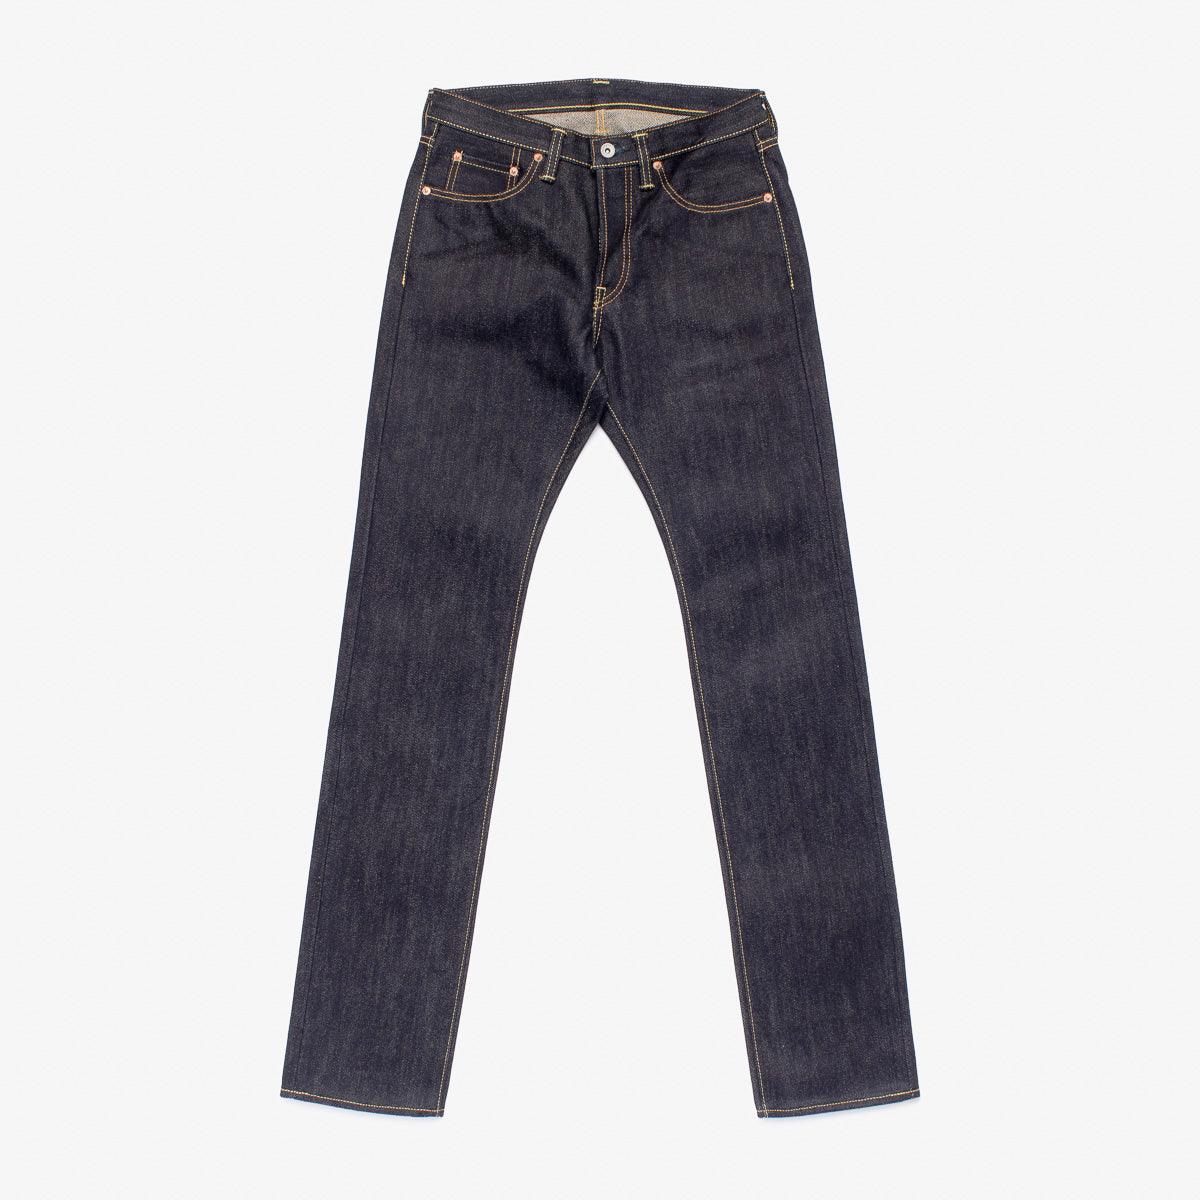 IH-555-XHS - 25oz Selvedge Denim Slim Straight Cut Jeans in Indigo